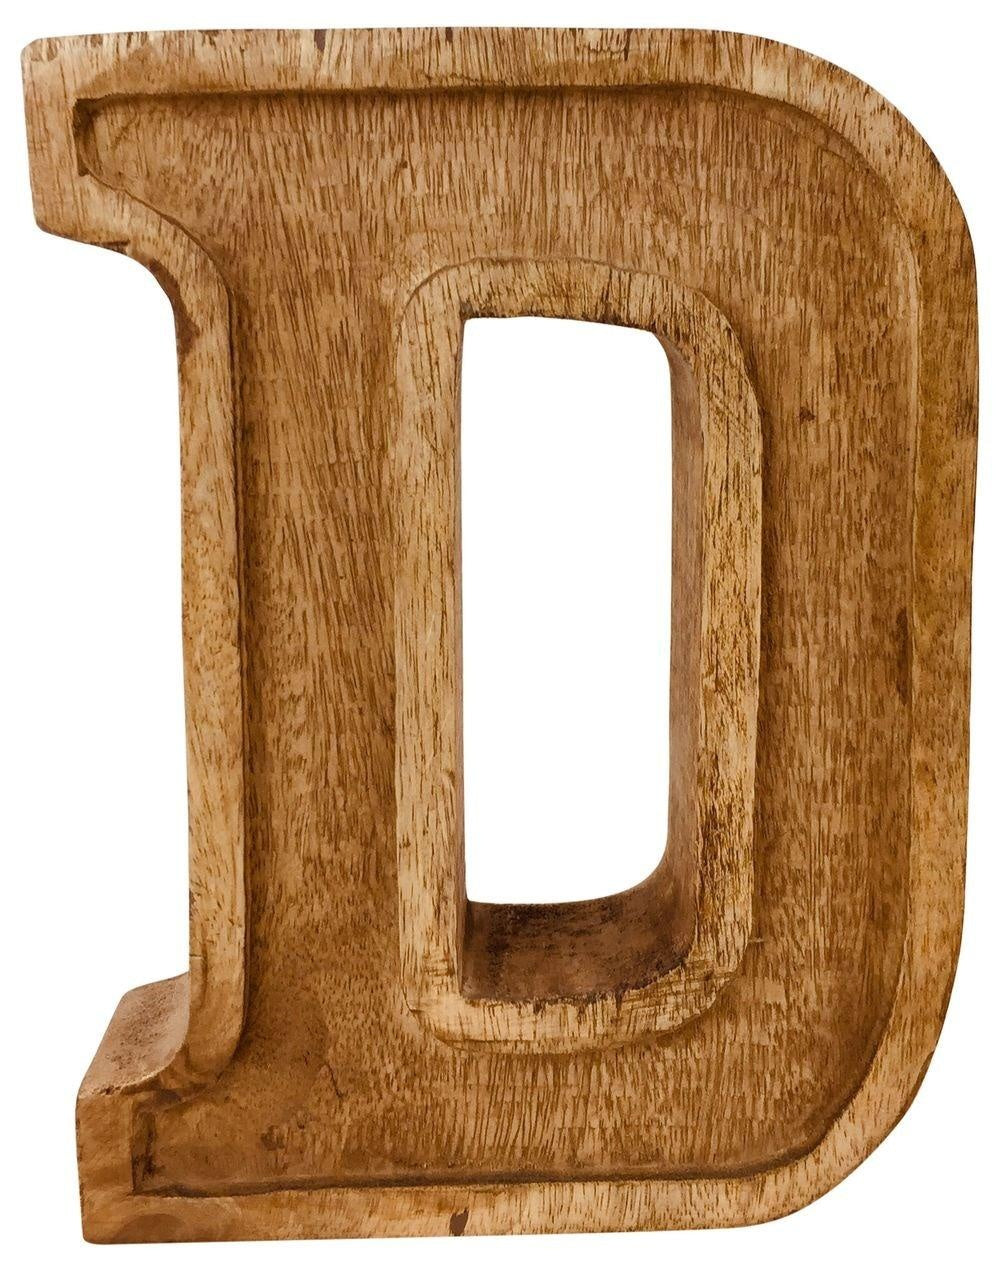 Hand Carved Wooden Embossed Letter D